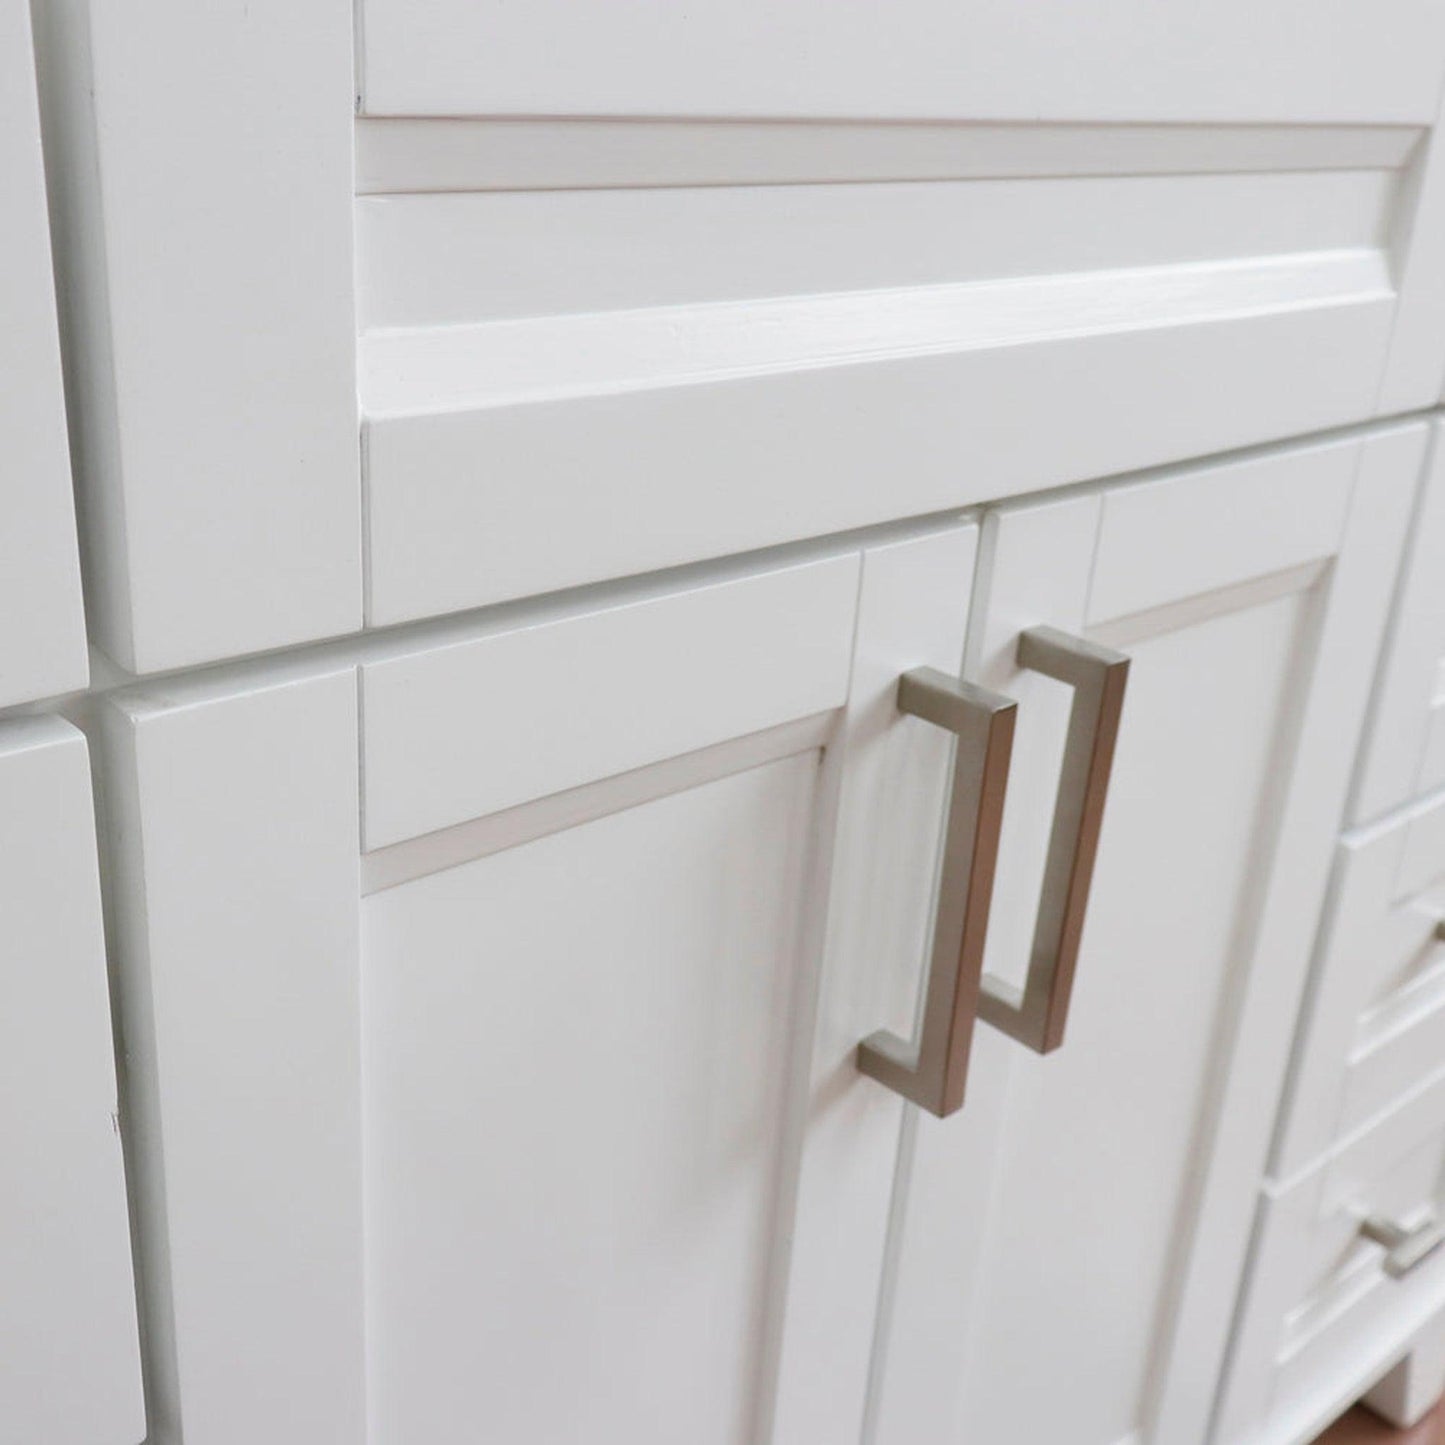 Bellaterra Home Terni 49" 2-Door 6-Drawer White Freestanding Vanity Set With Ceramic Vessel Sink and White Carrara Marble Top